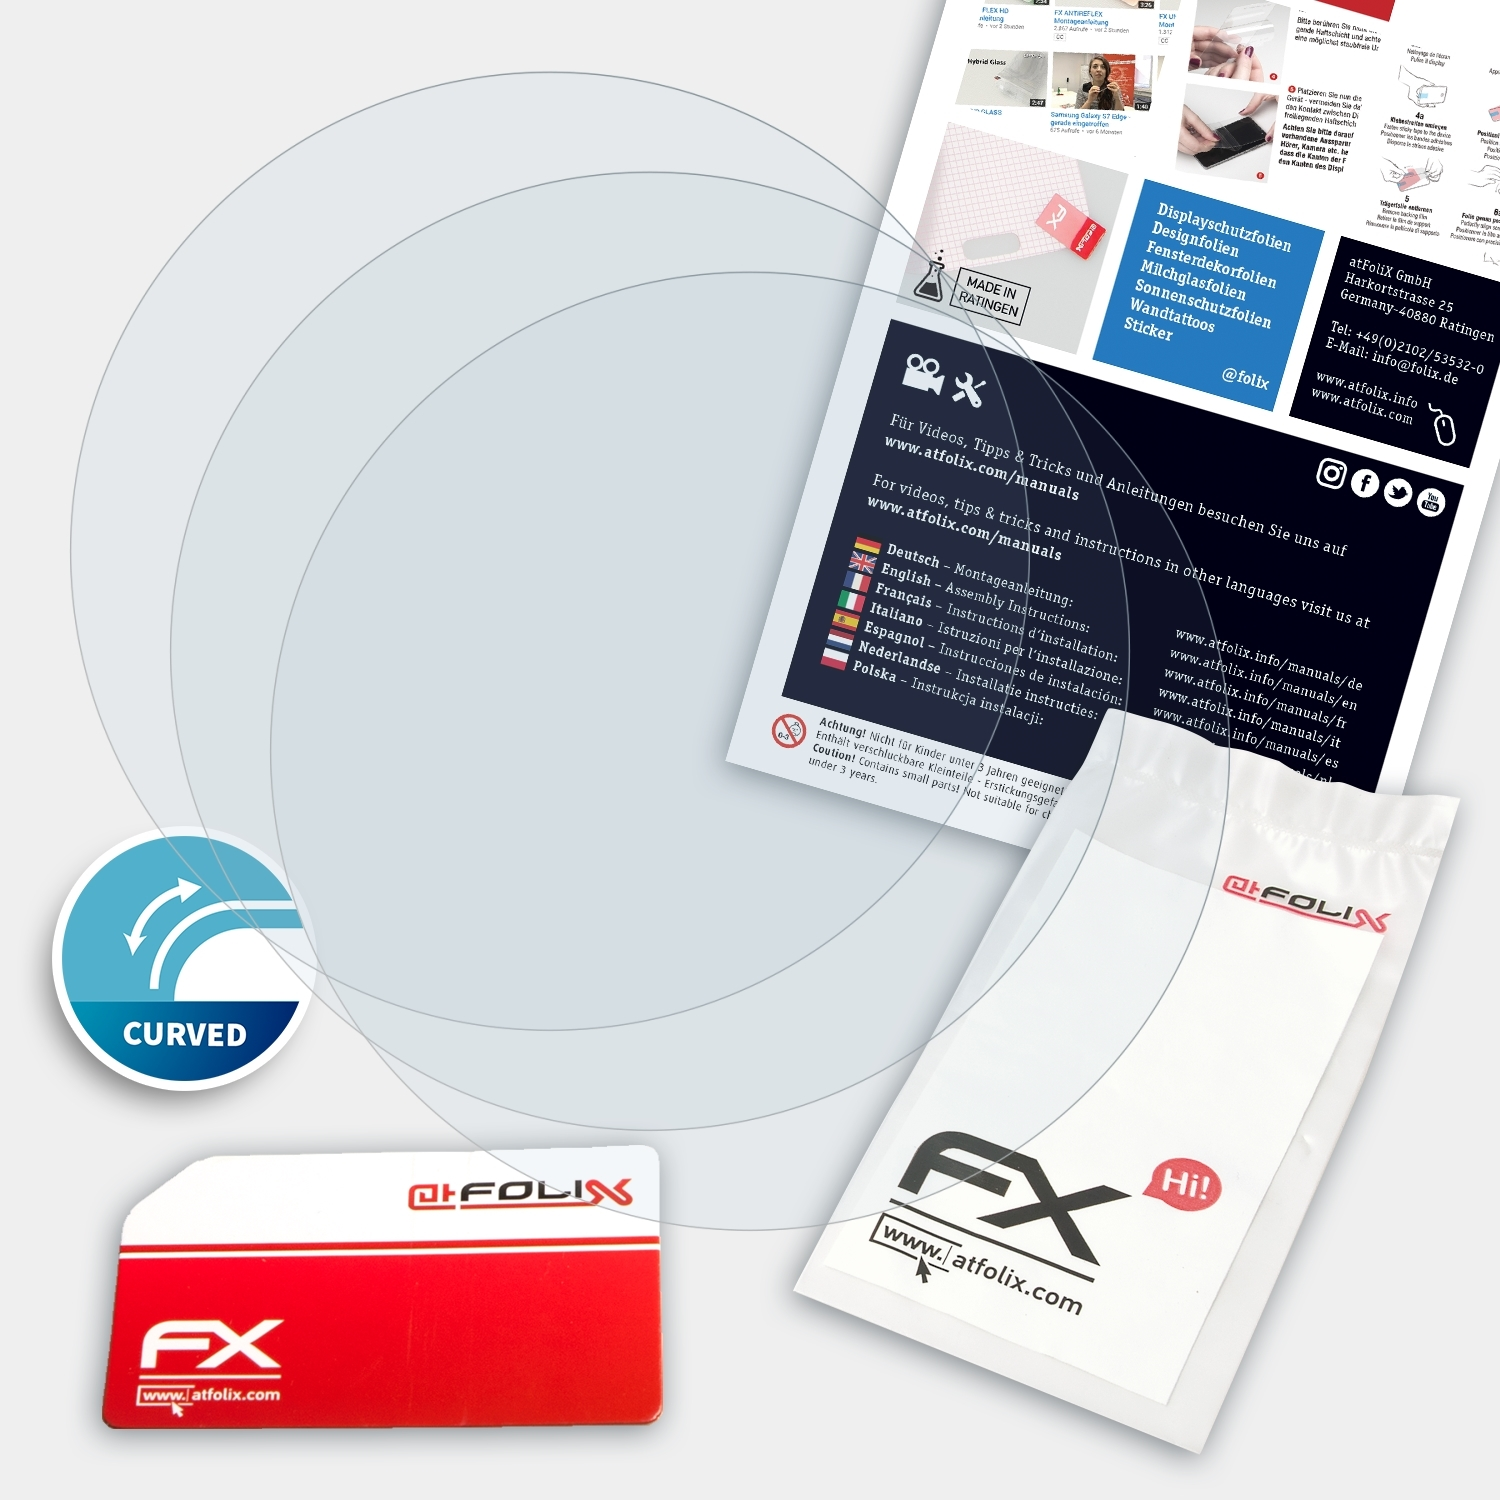 FX-ActiFleX Zeblaze ATFOLIX Displayschutz(für 4 Pro) Thor 3x